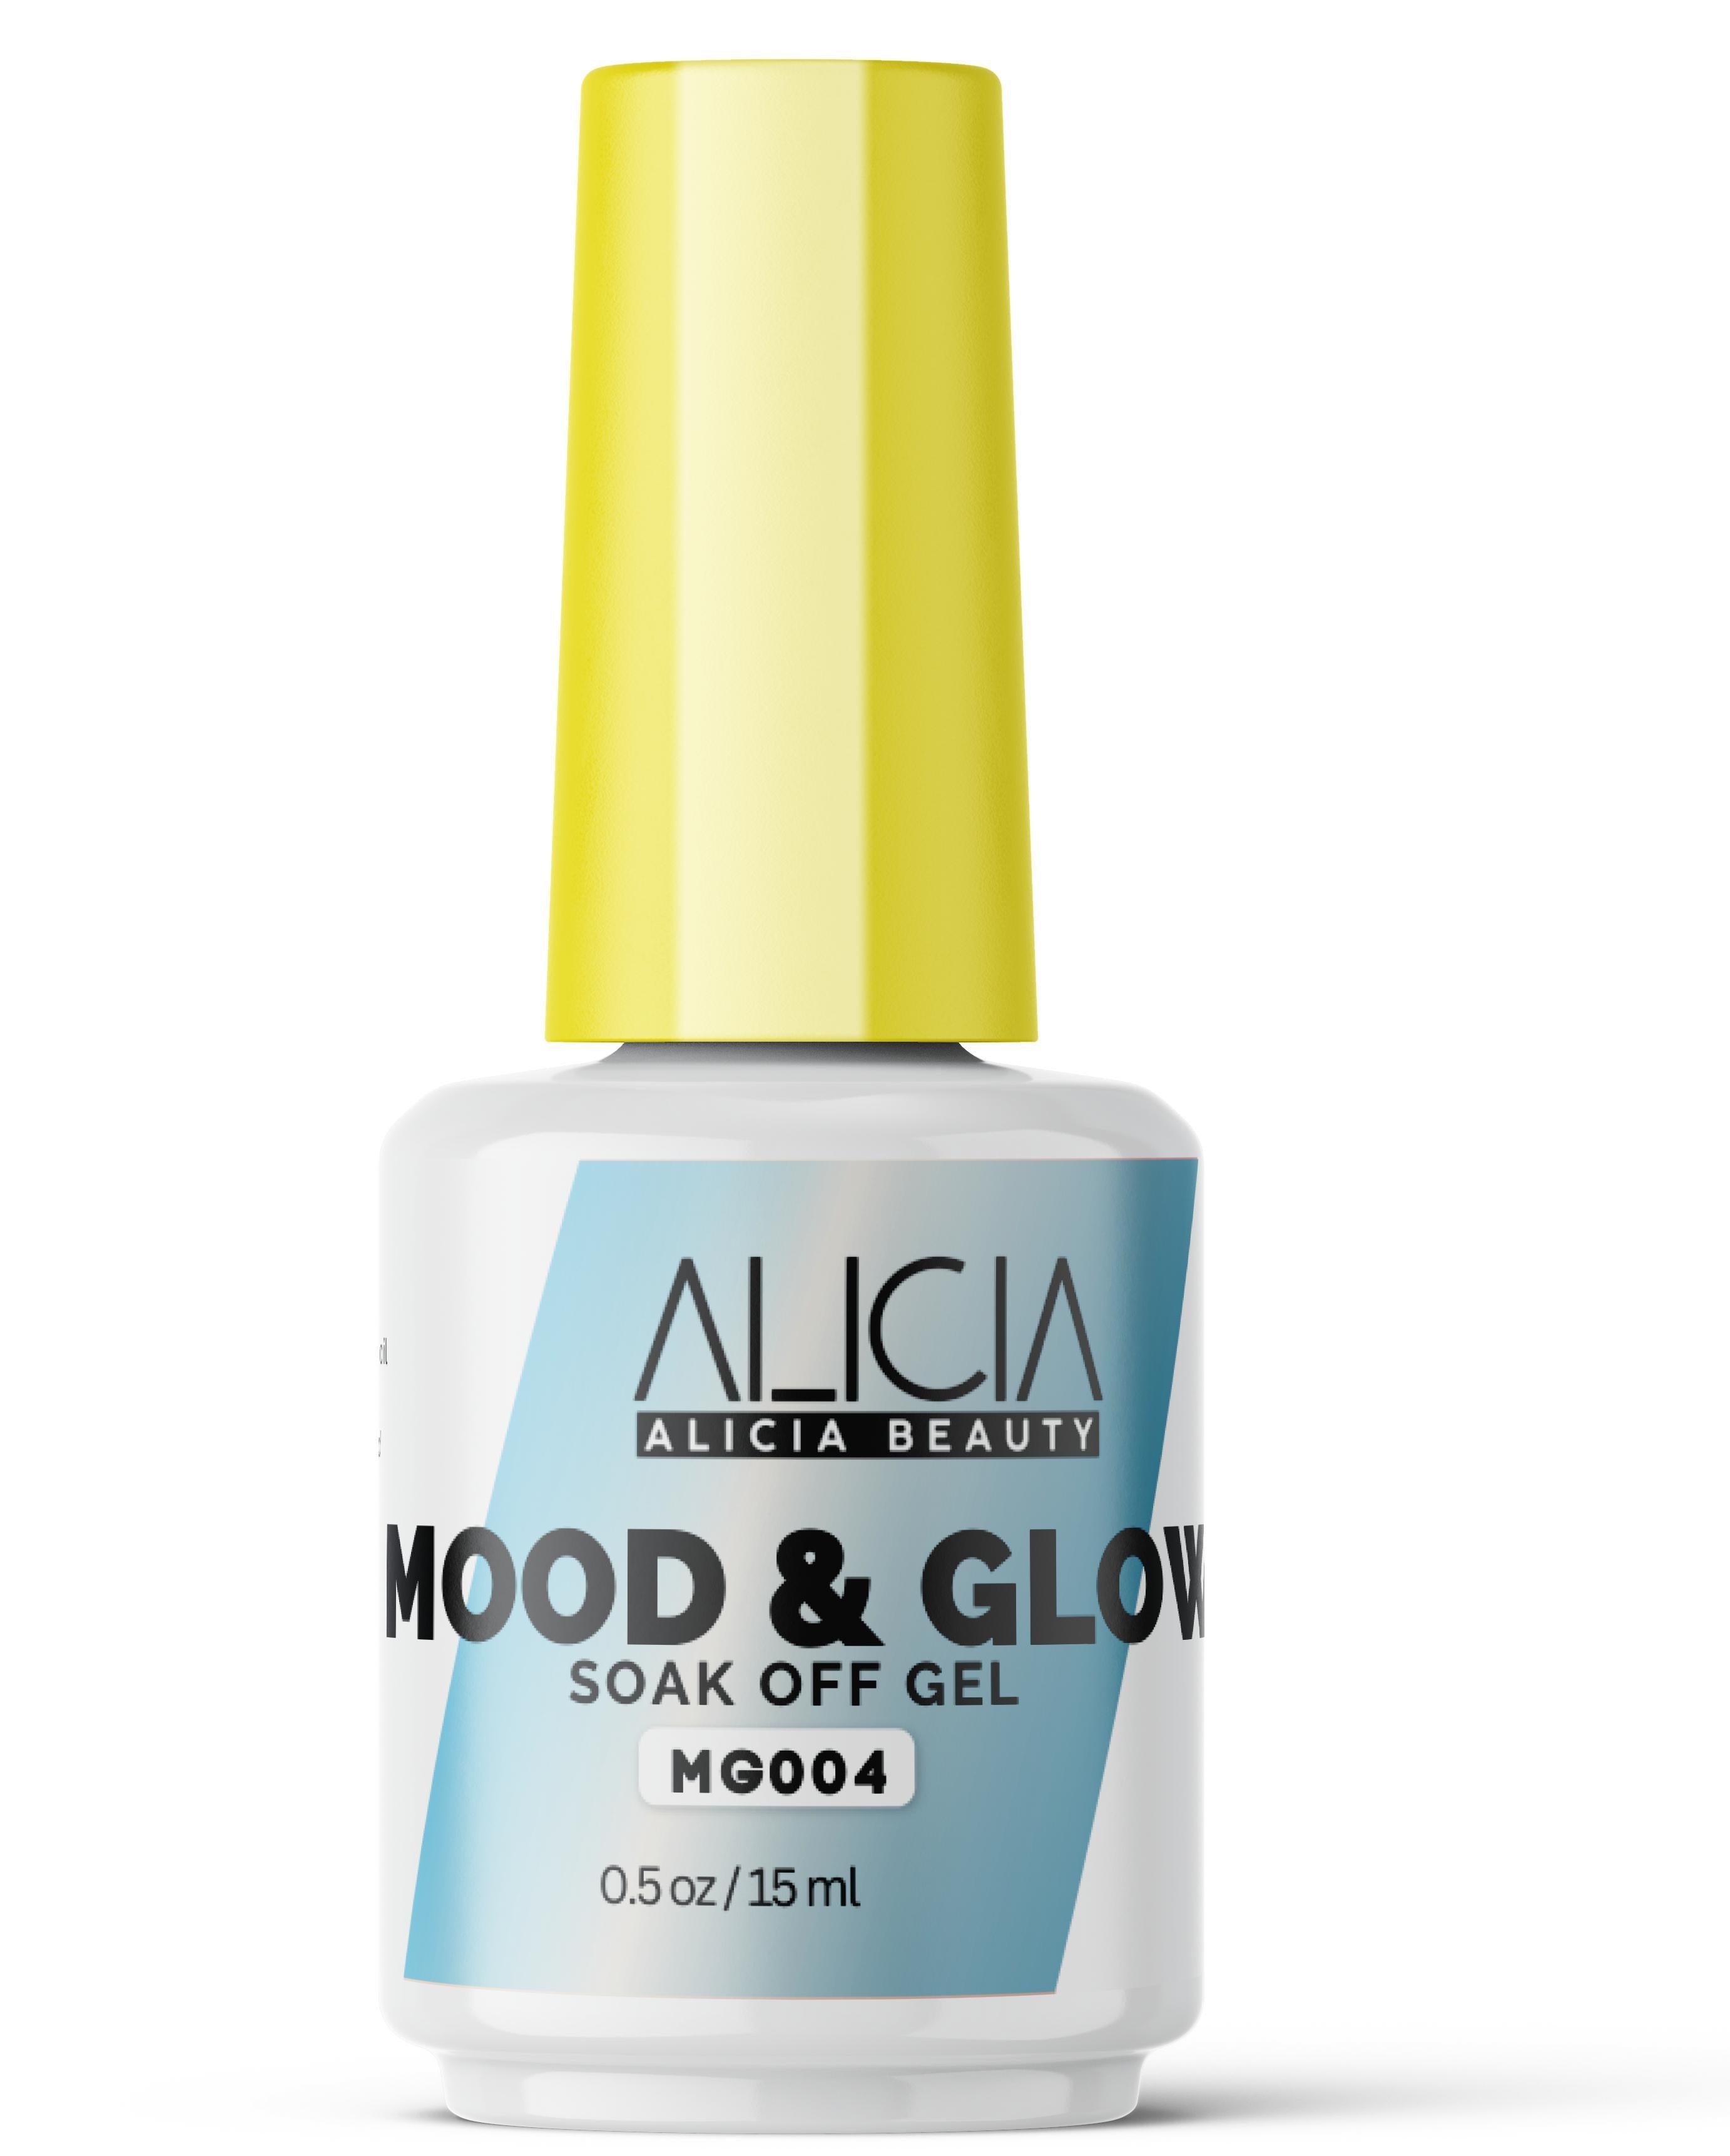 Alicia Beauty - Glow & Mood Soak Off Gel - MG004 (0.5oz/15ml)-GEL POLISH SOAK-OFF-ALICIA BEAUTY- Nail Supply American Gel Polish - Phuong Ni